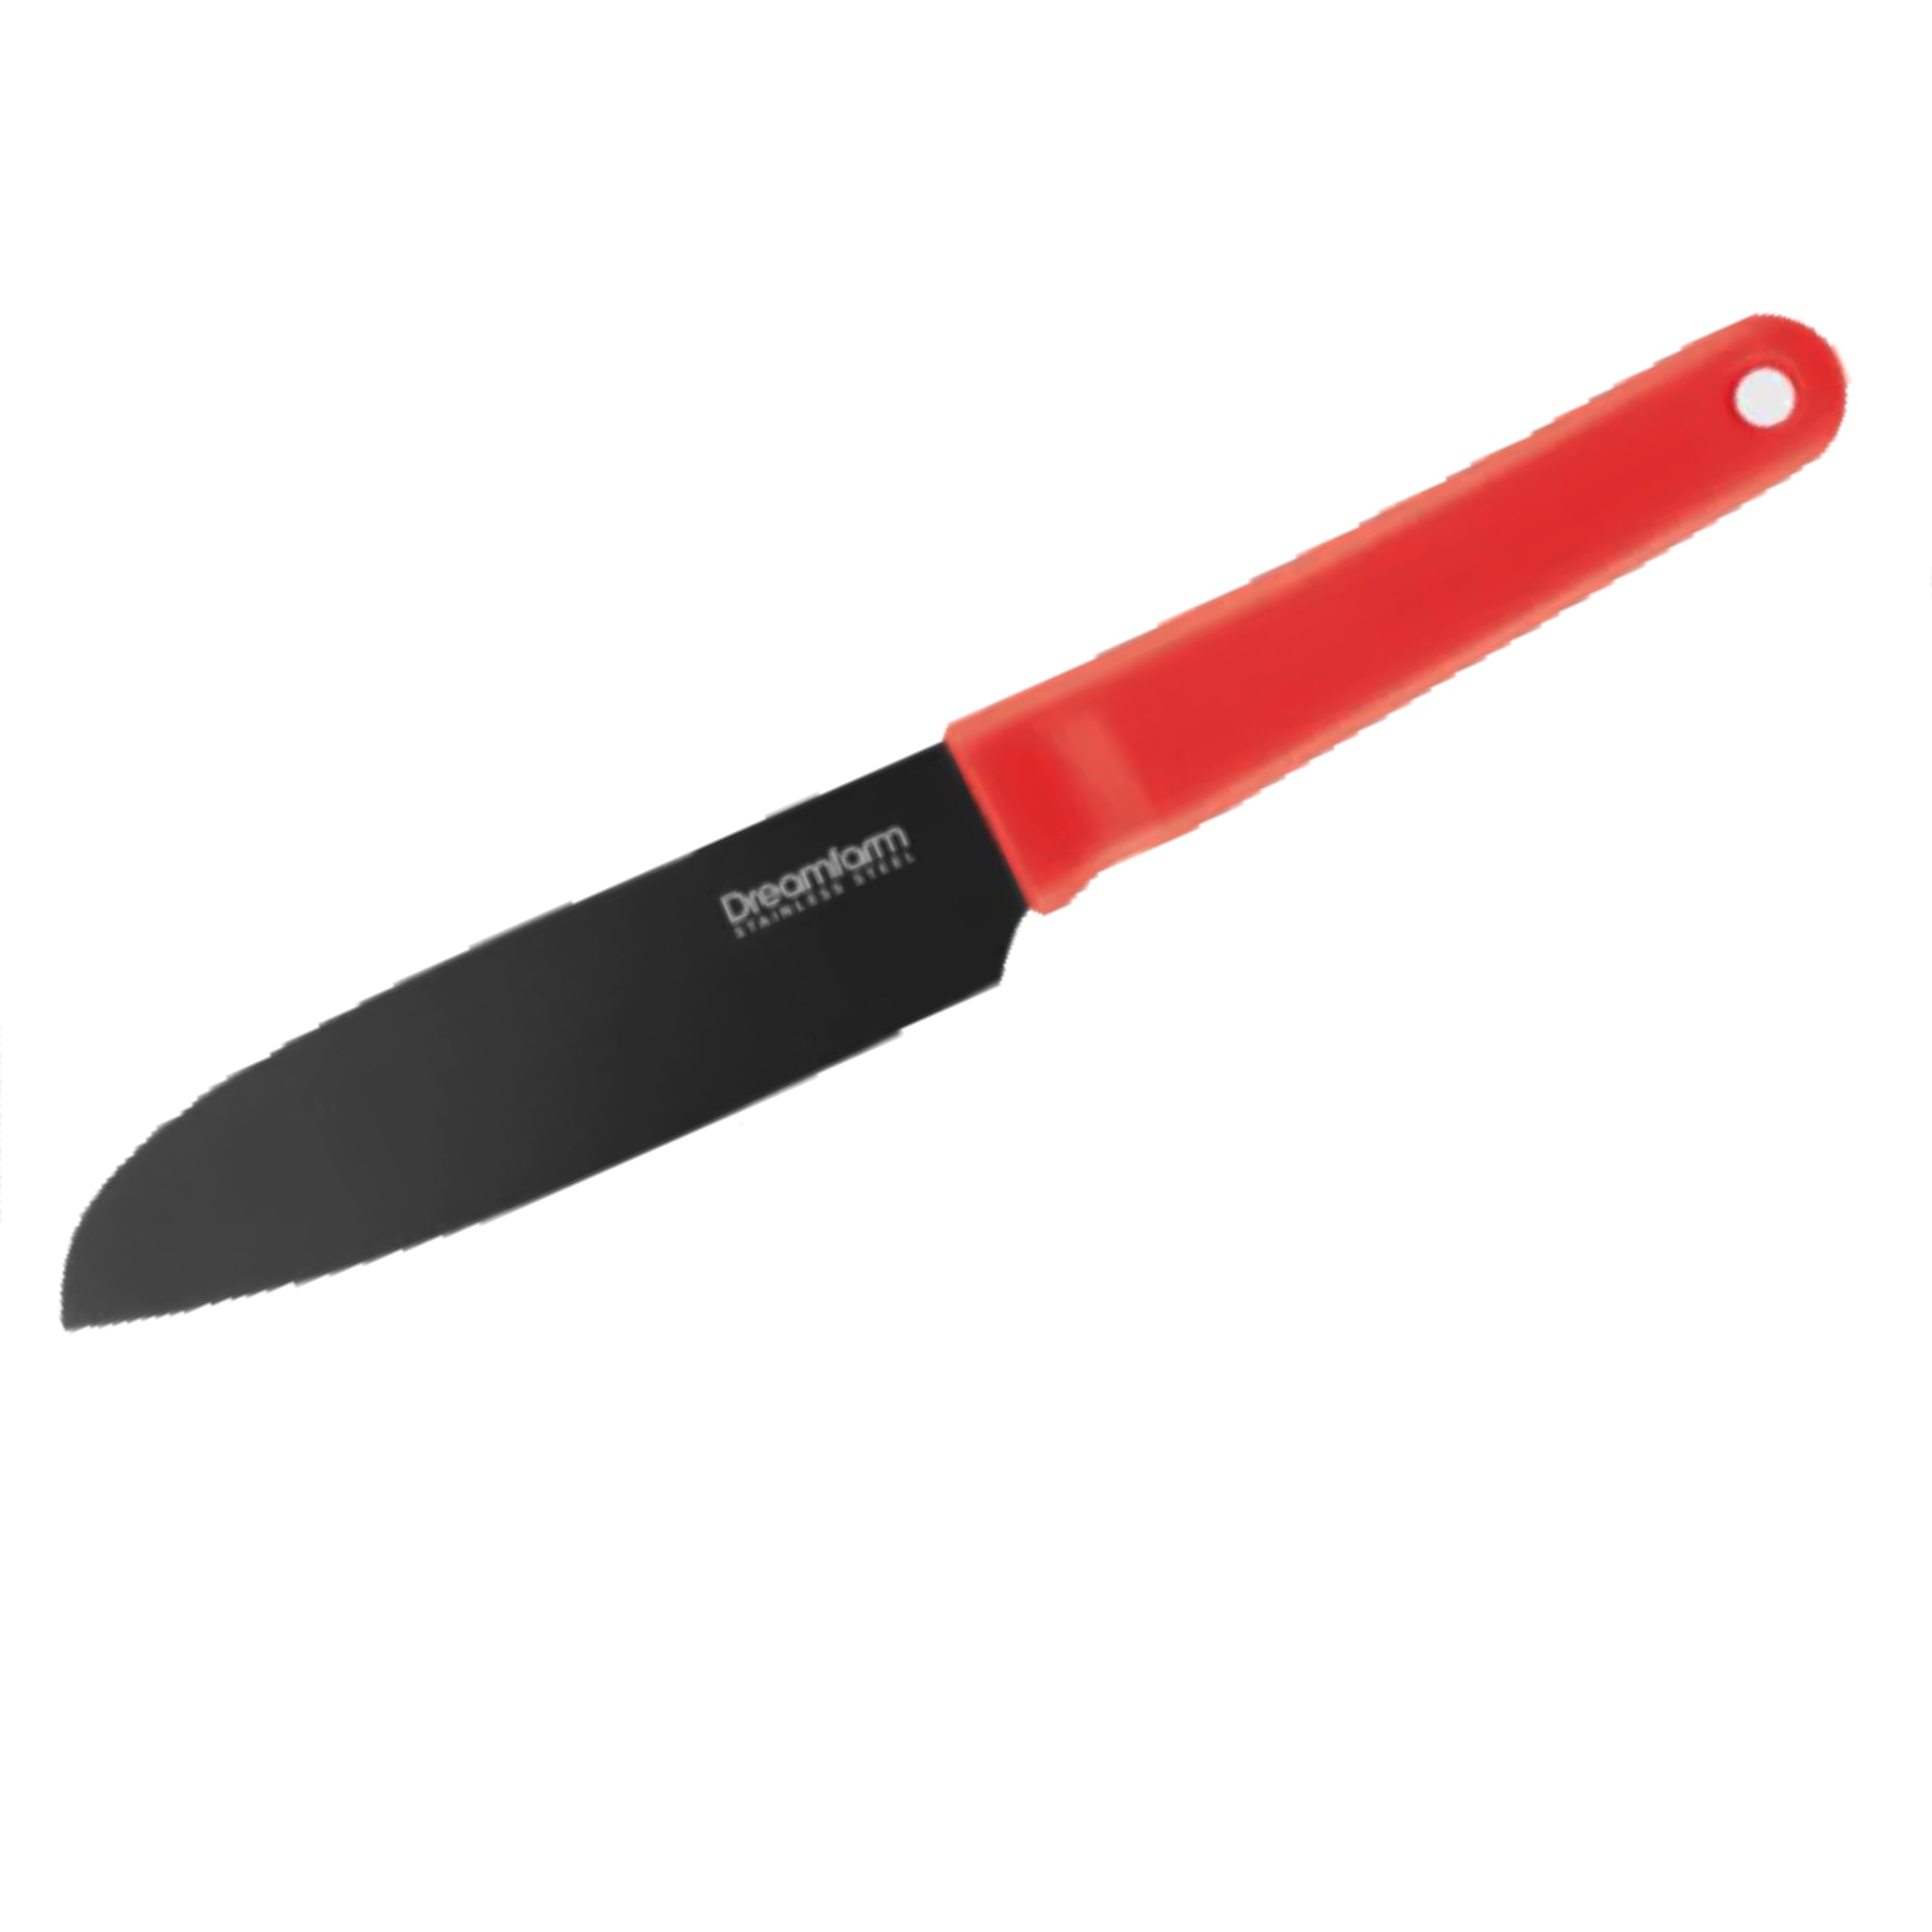 Dreamfarm Kneed Multi-Purpose Knife and Spreader – Red